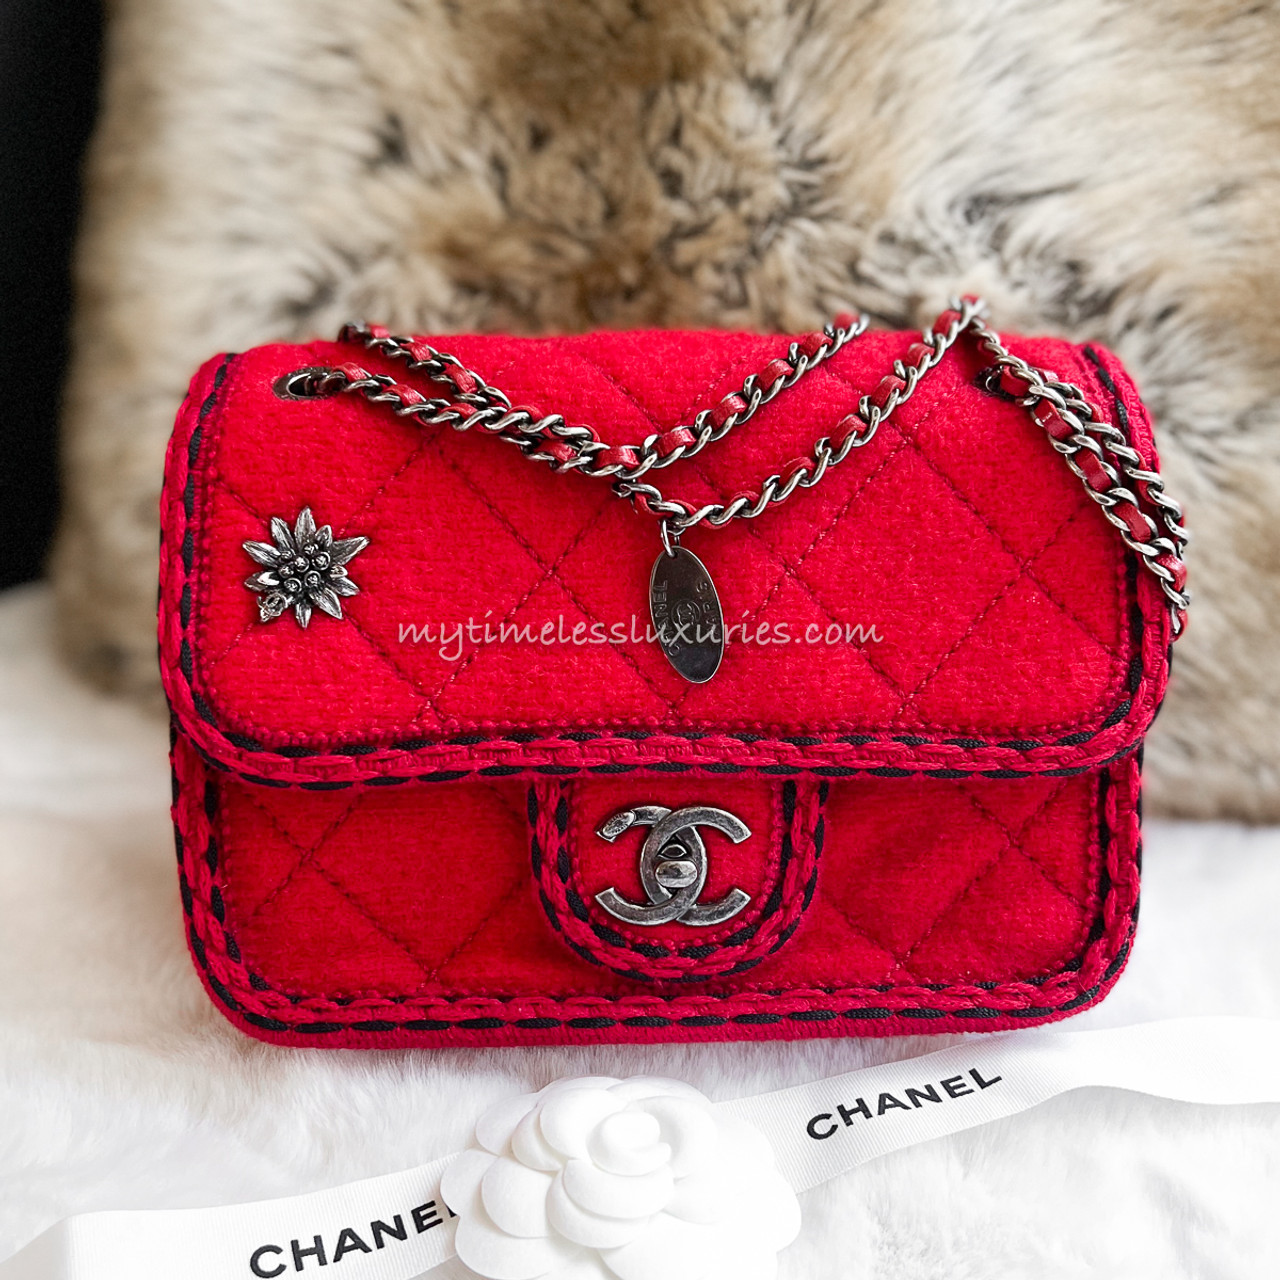 Chanel Metiers DArt ParisSalzburg Runway Bag Collection  Bragmybag